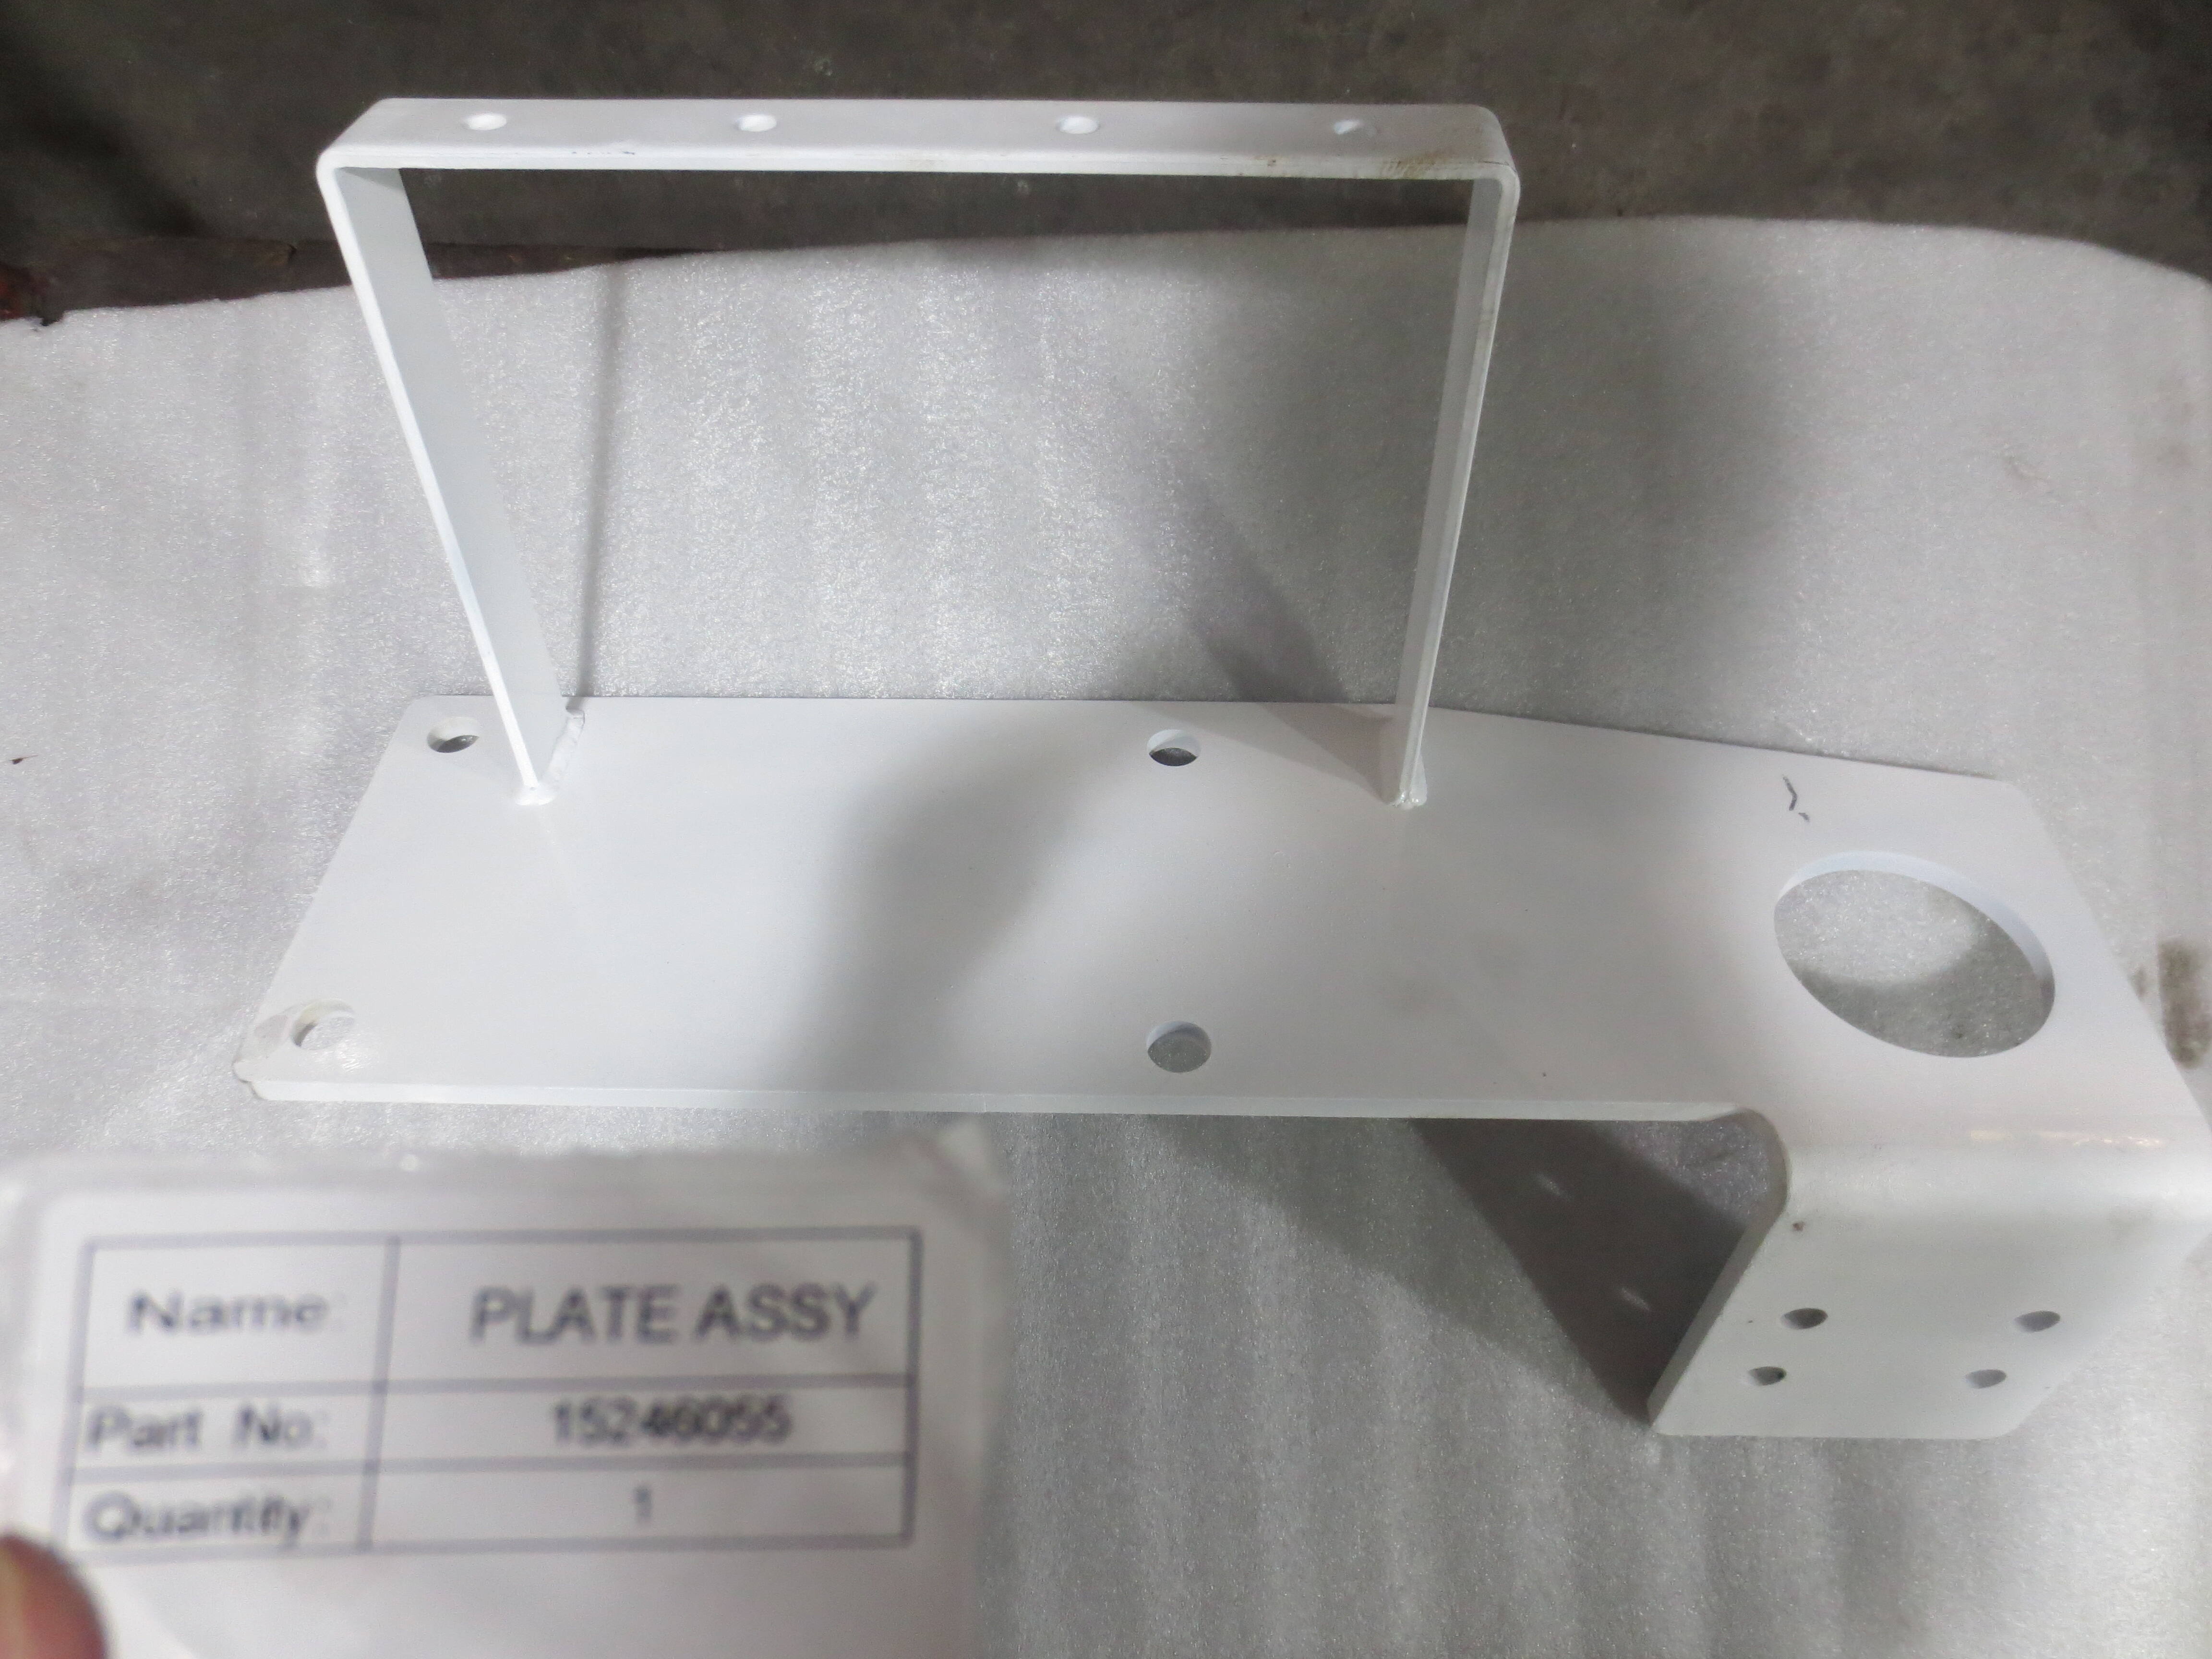 Terex Plate Assy 15246055 Terex TR100 Parts factory